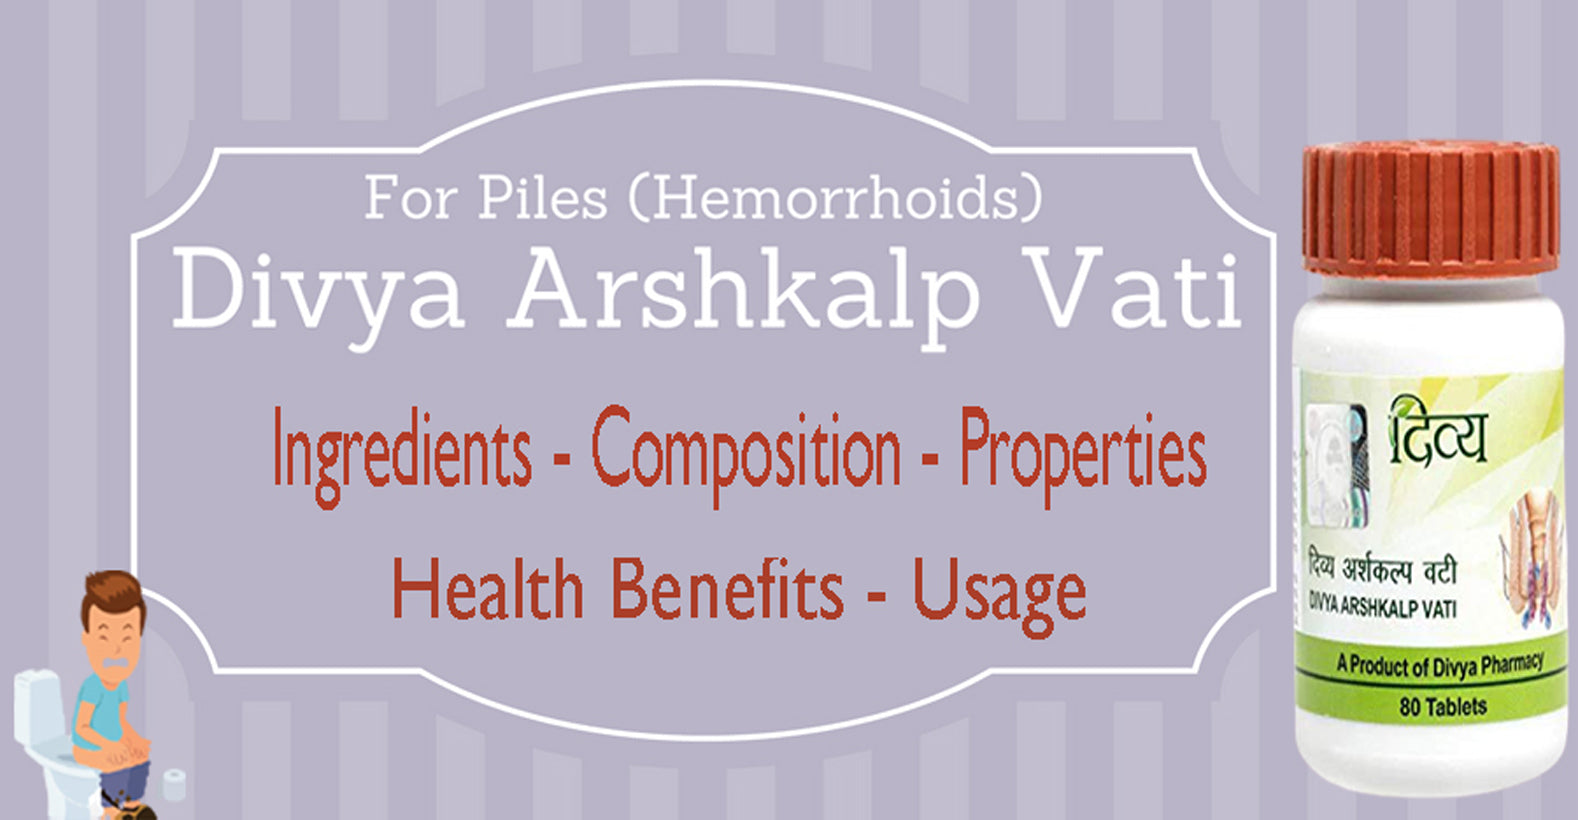 Patanjali Arshkalp Vati-Ingredients, Composition, Properties, Health Benefits, Usage